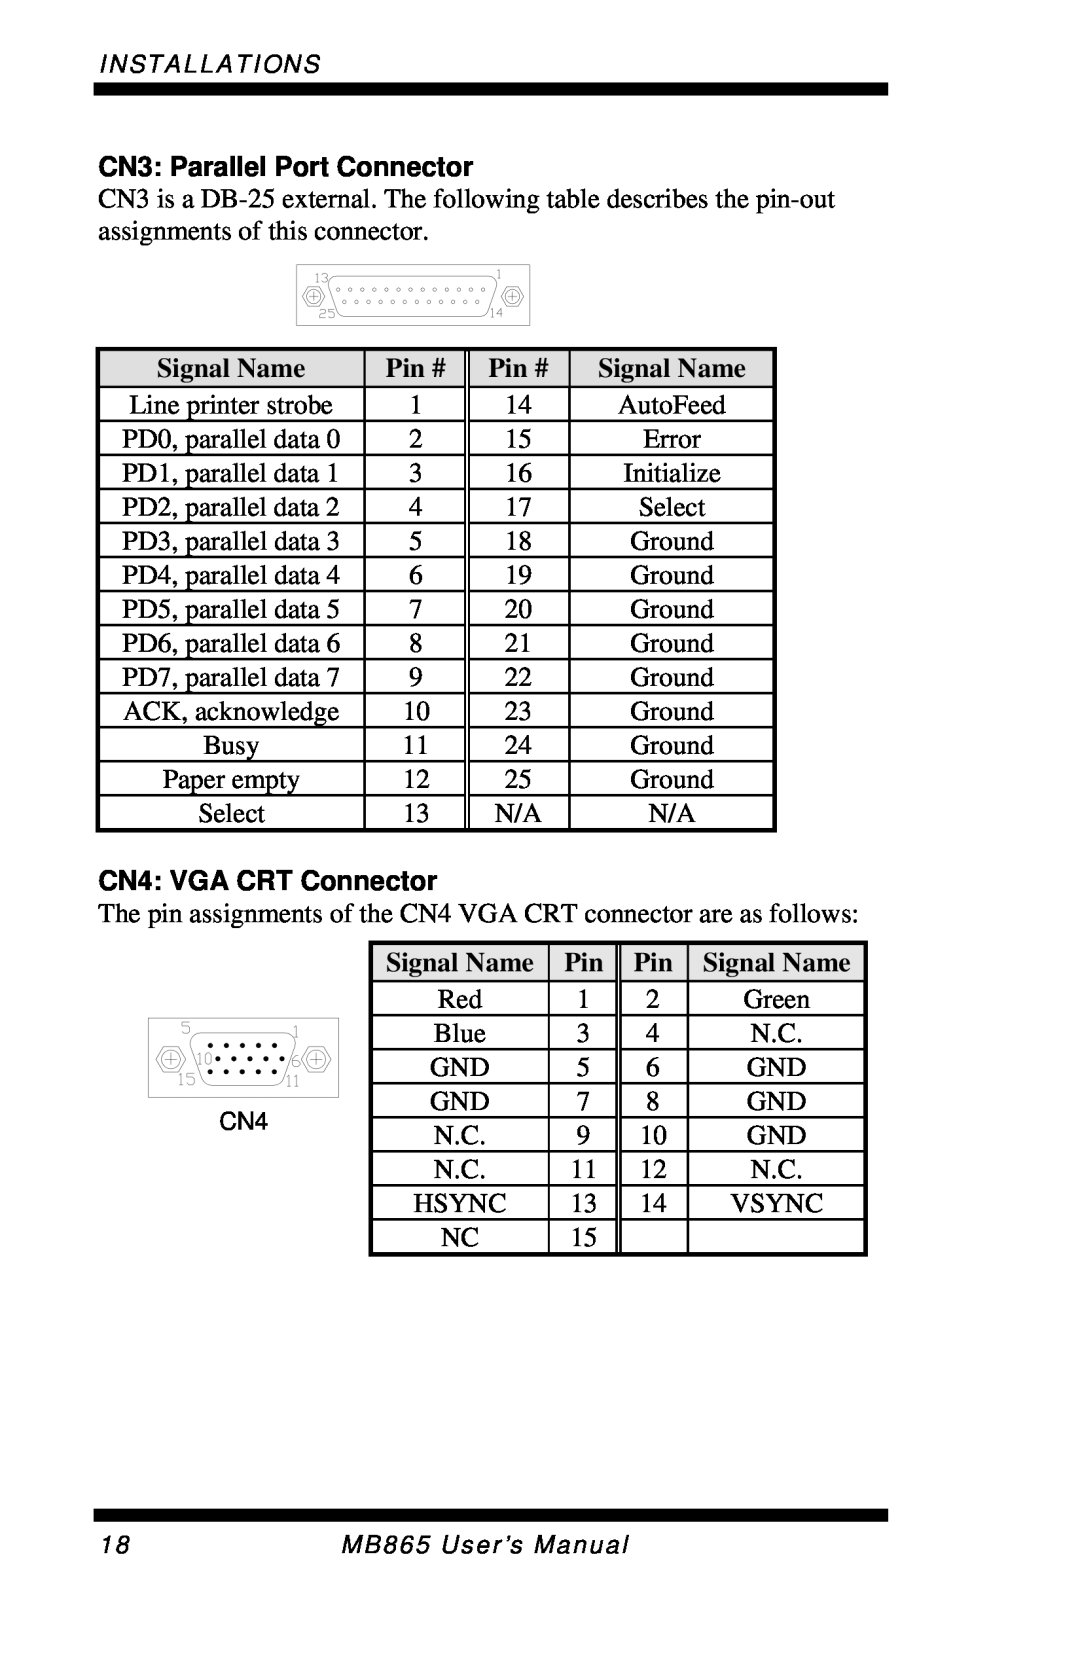 Intel MB865 user manual CN3 Parallel Port Connector, CN4 VGA CRT Connector, Signal Name, Pin # 